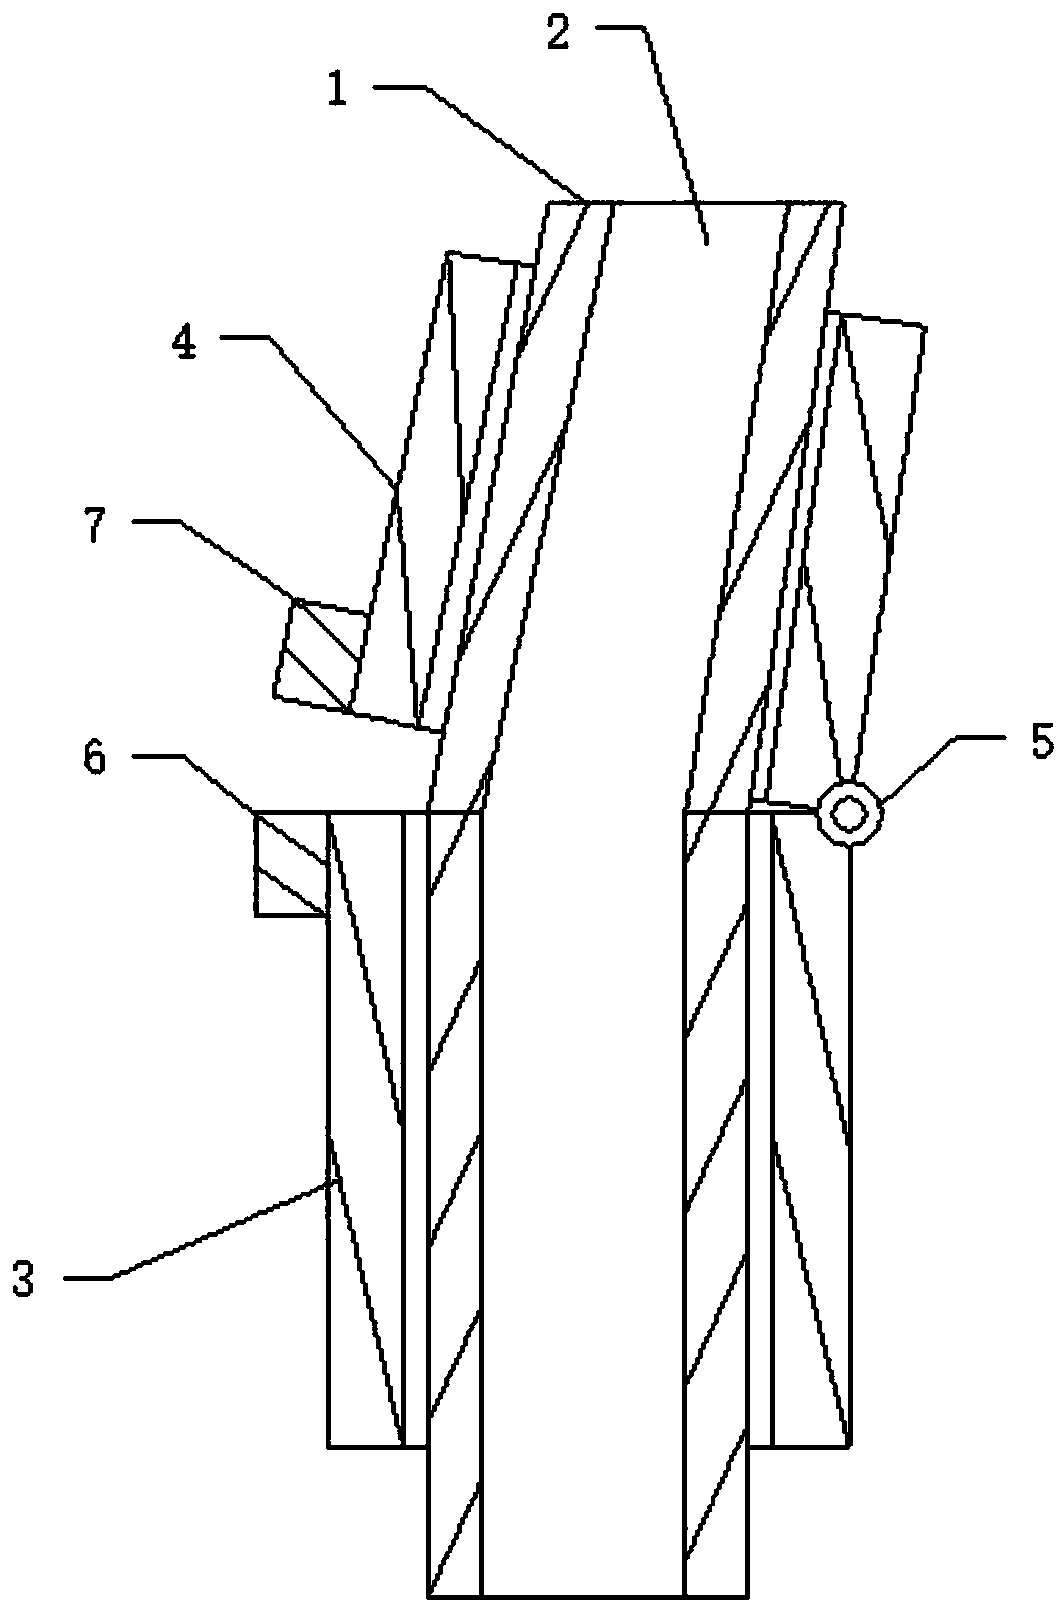 Telegraph pole bending correction device